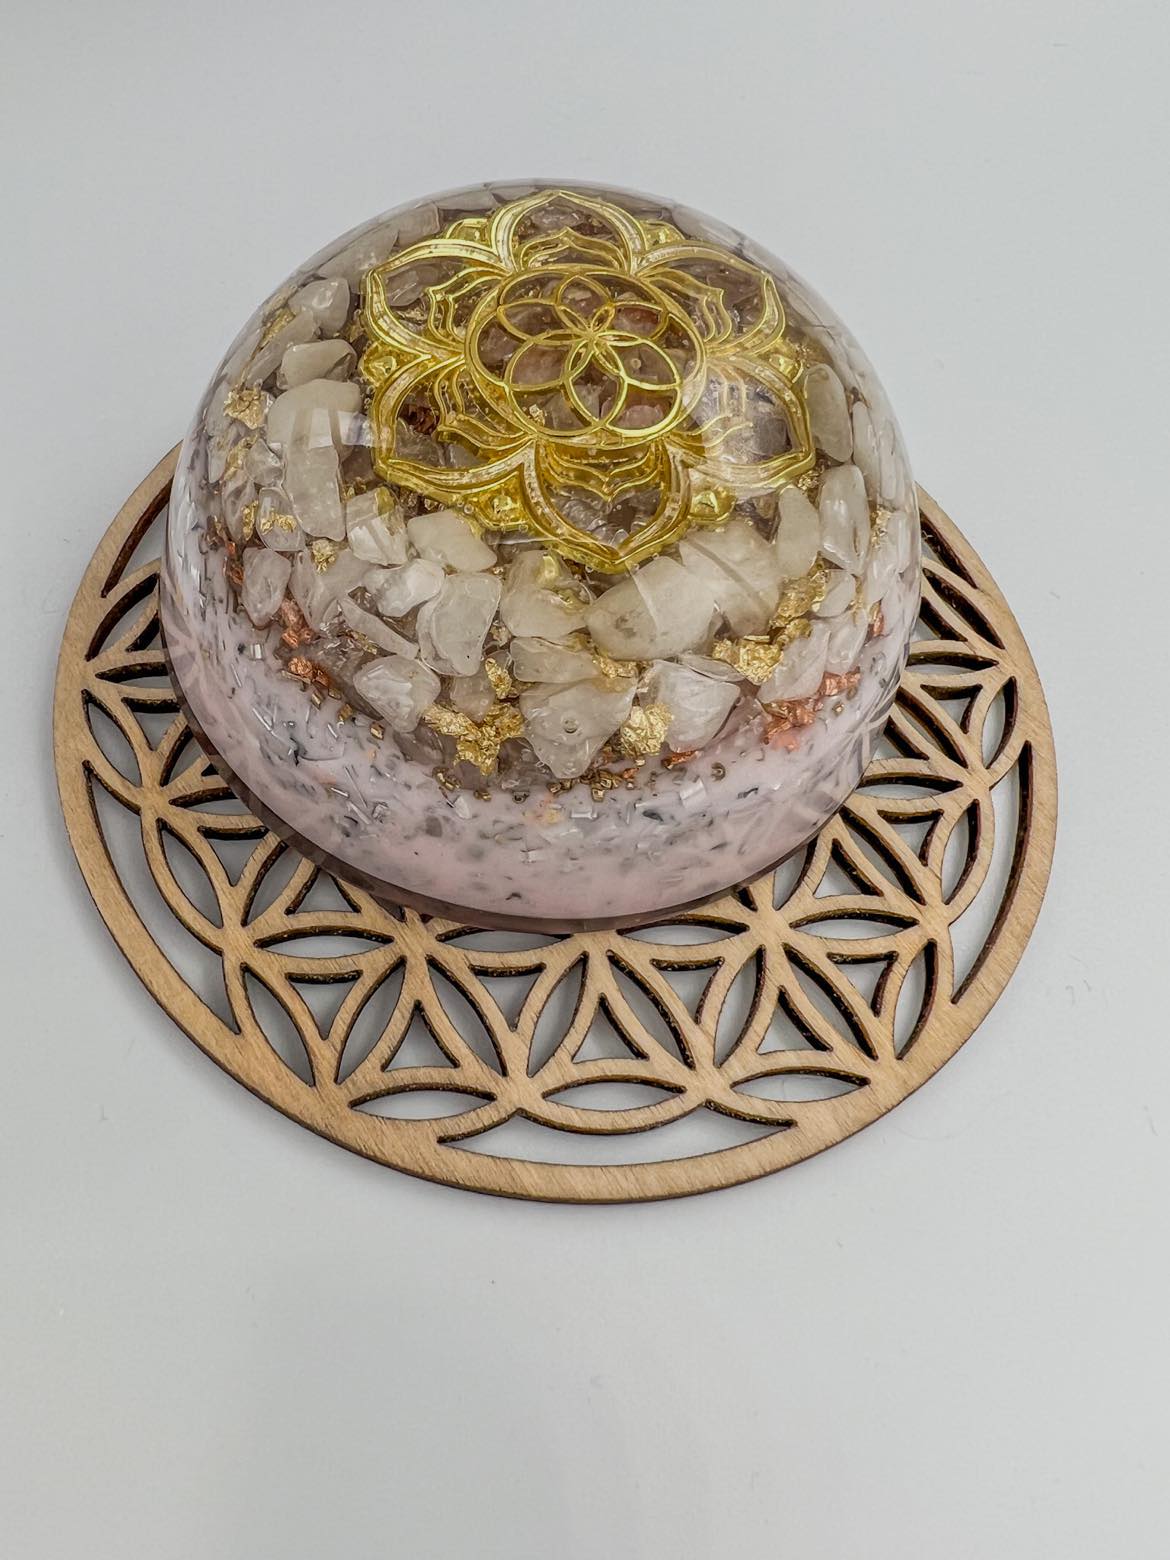 Orgonite Dome - Seed of Life on Lotus, Snow Quartz, Rock Crystal.